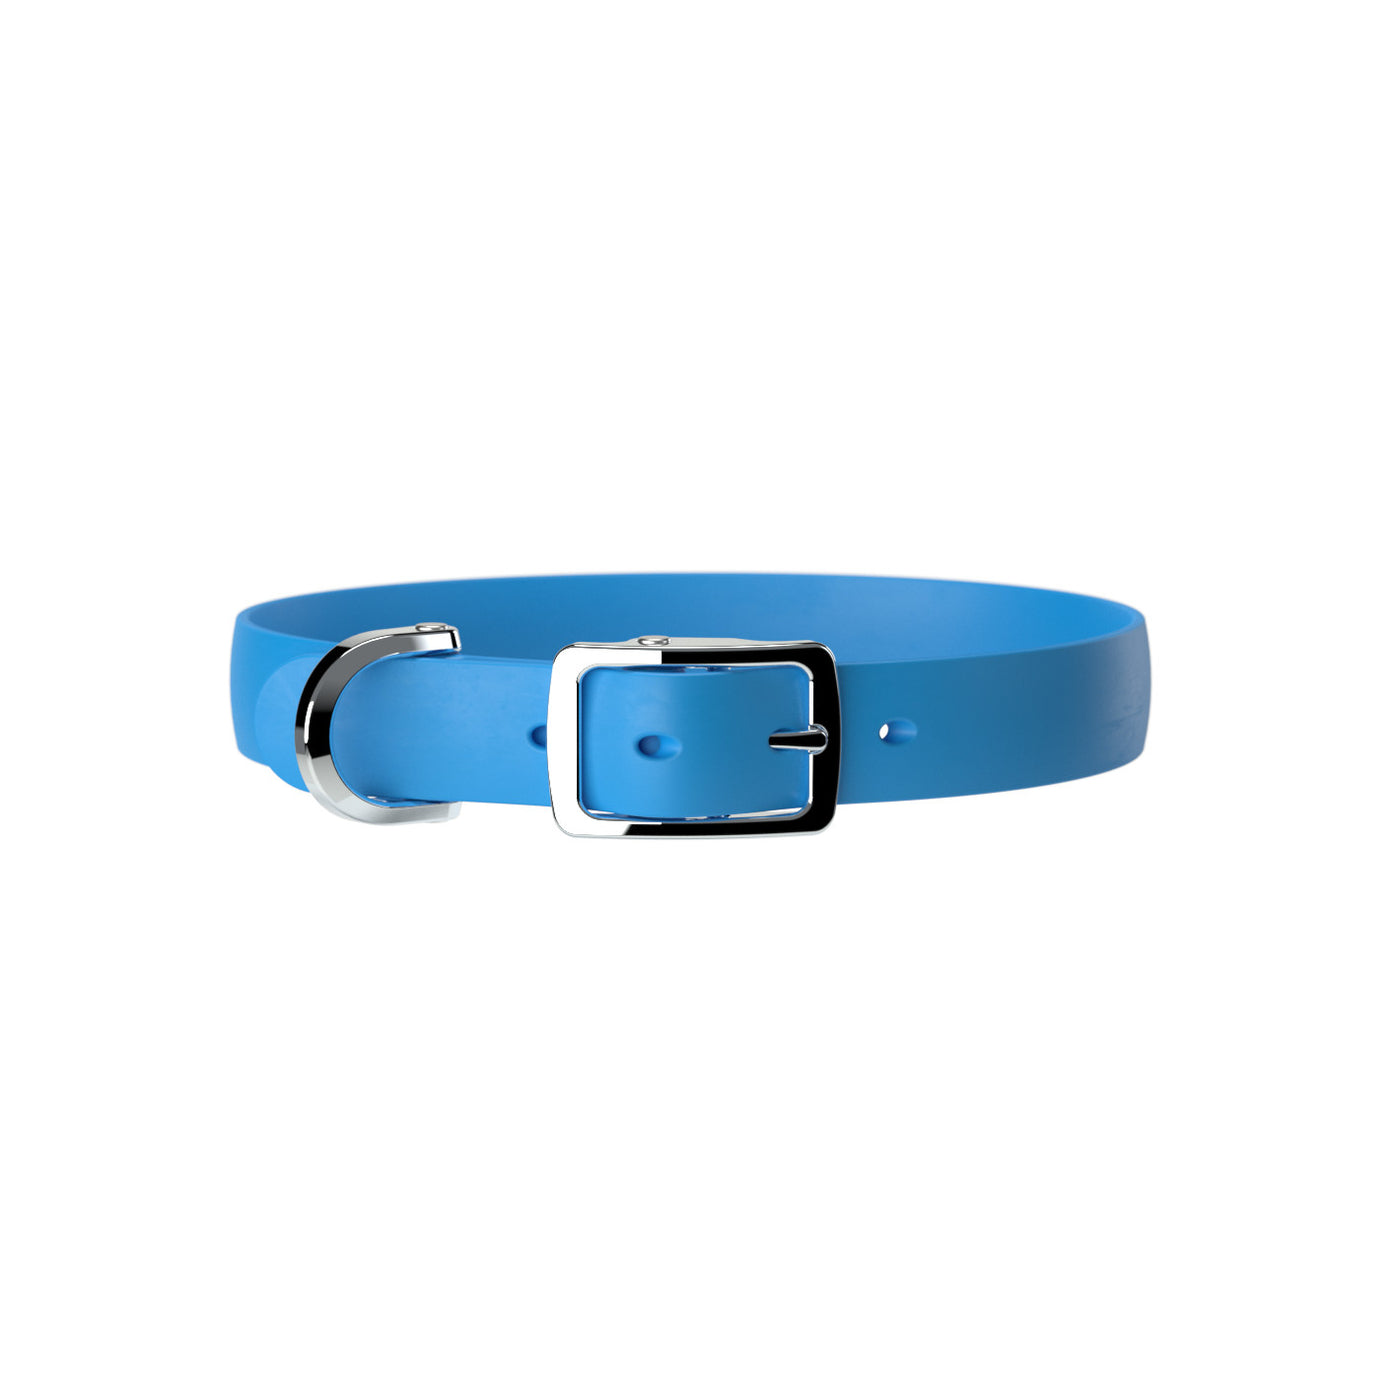 Blue waterproof dog collar